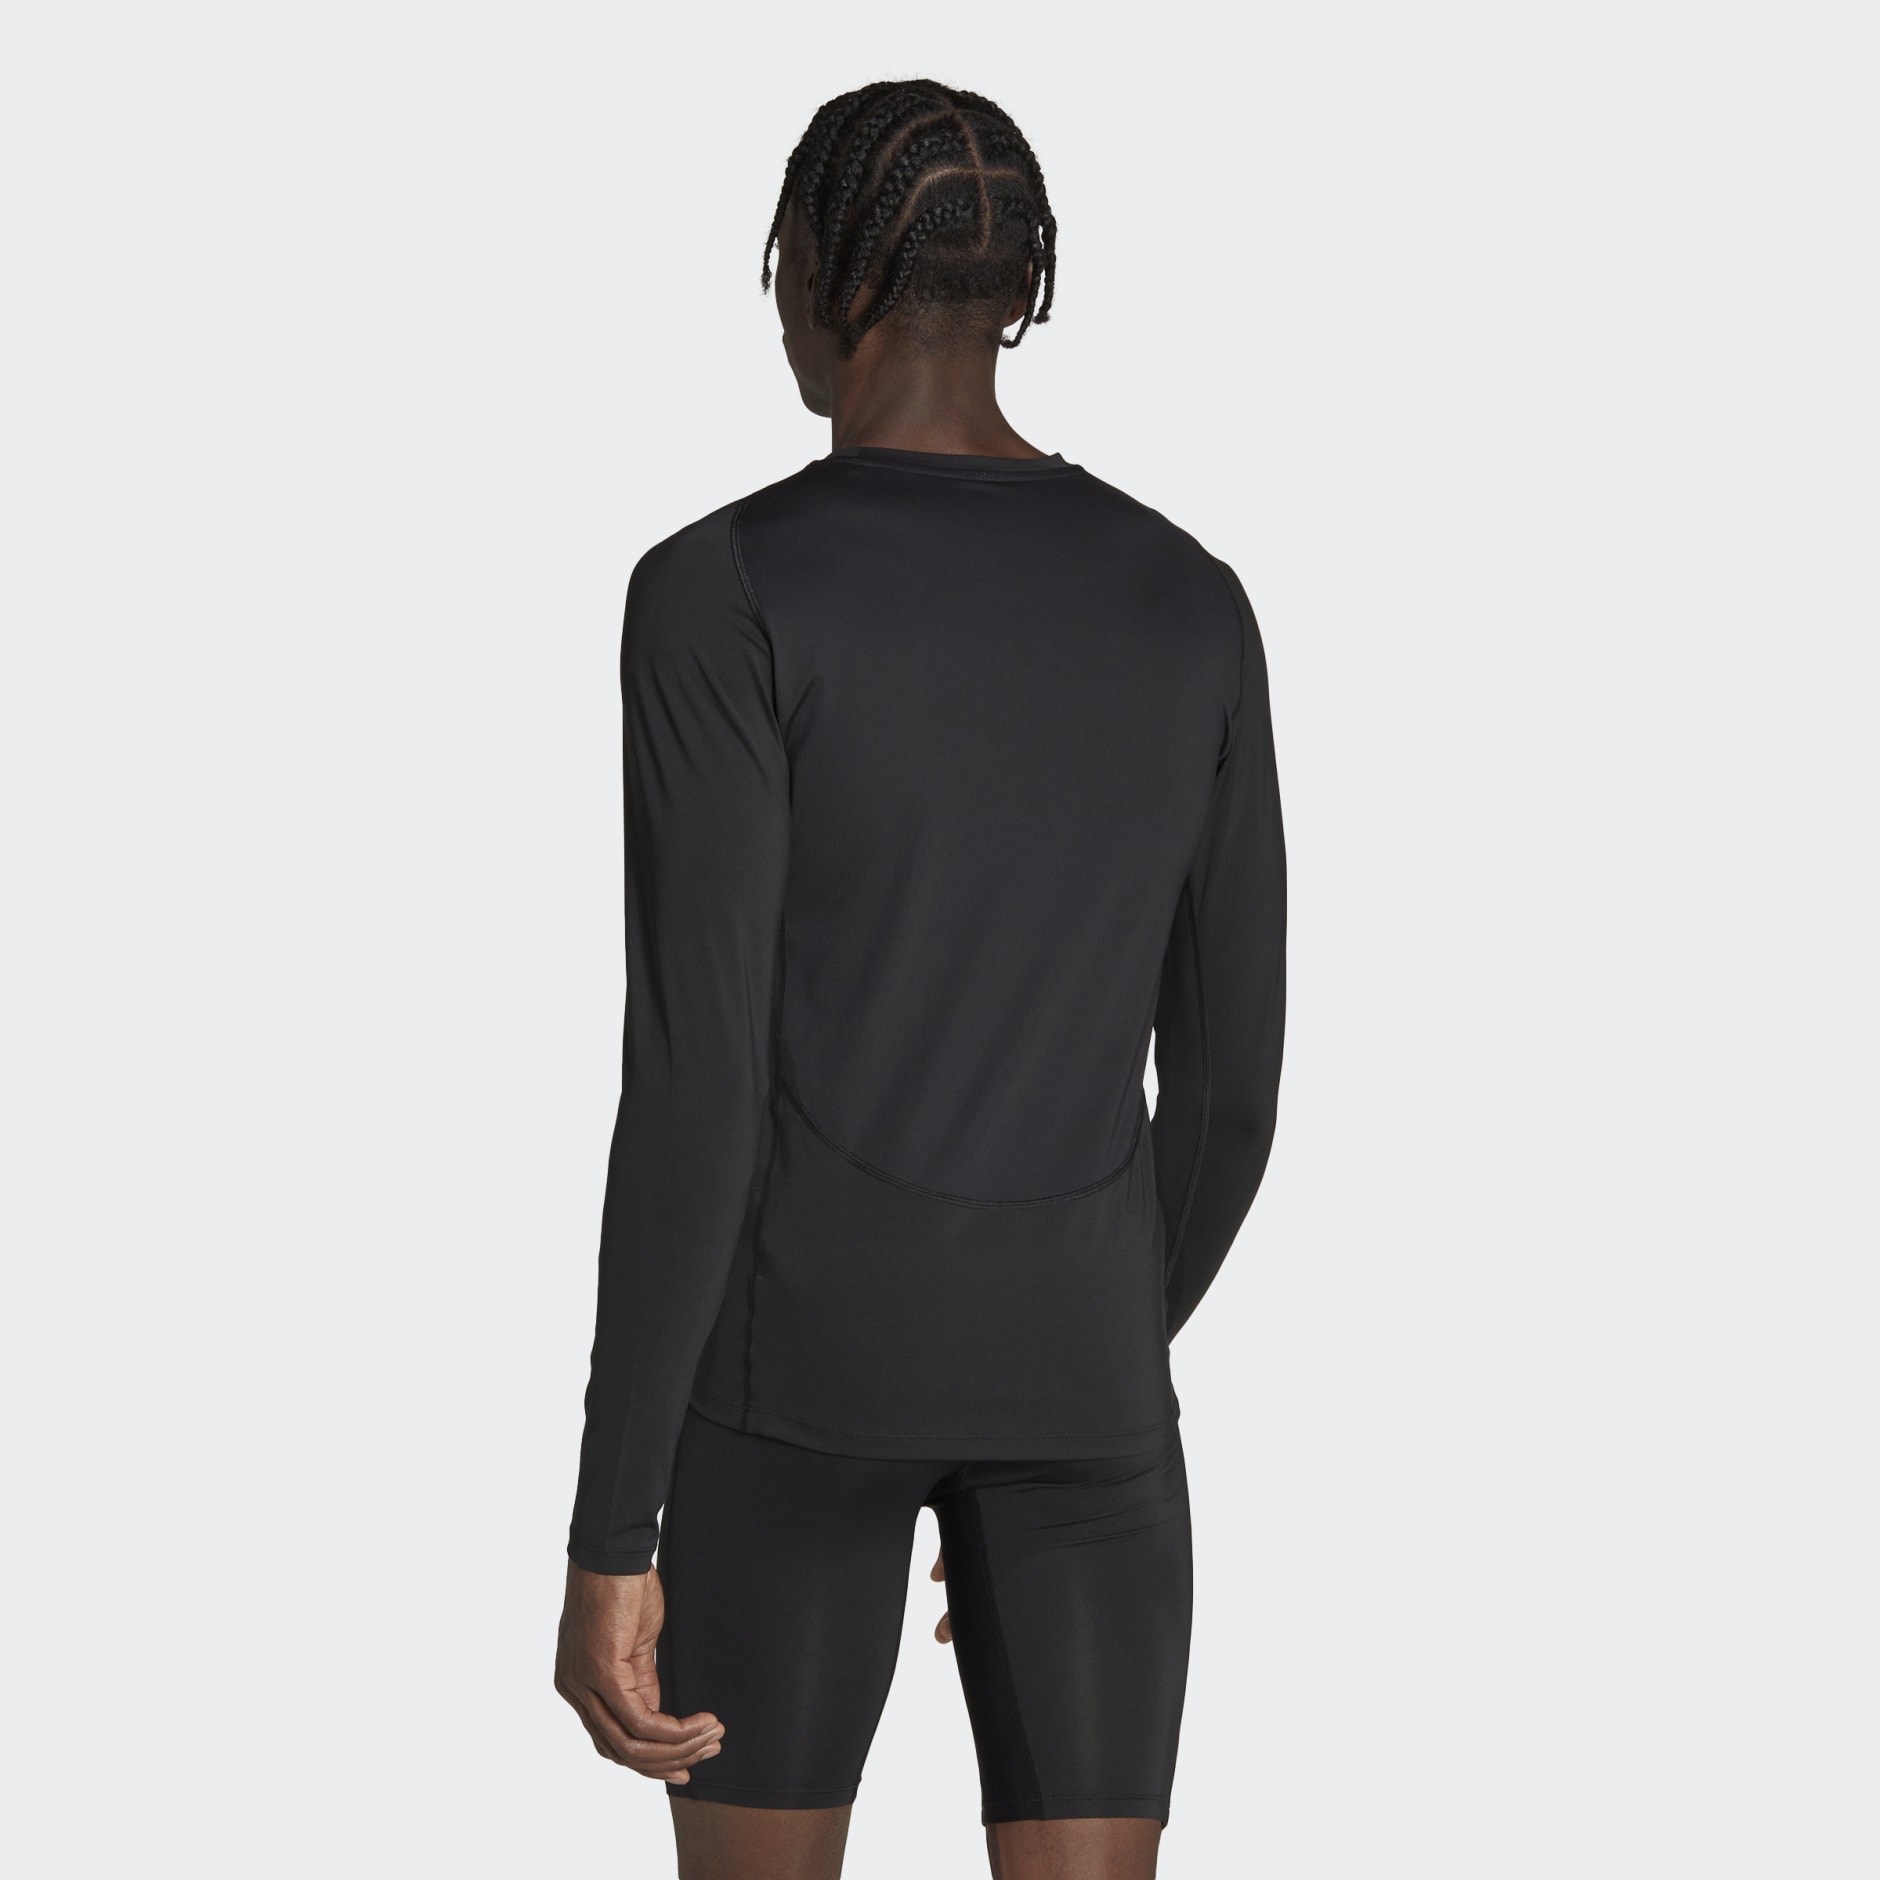 Adidas Climalite Compression TechFit Shirt Black Men's Size Medium - Helia  Beer Co